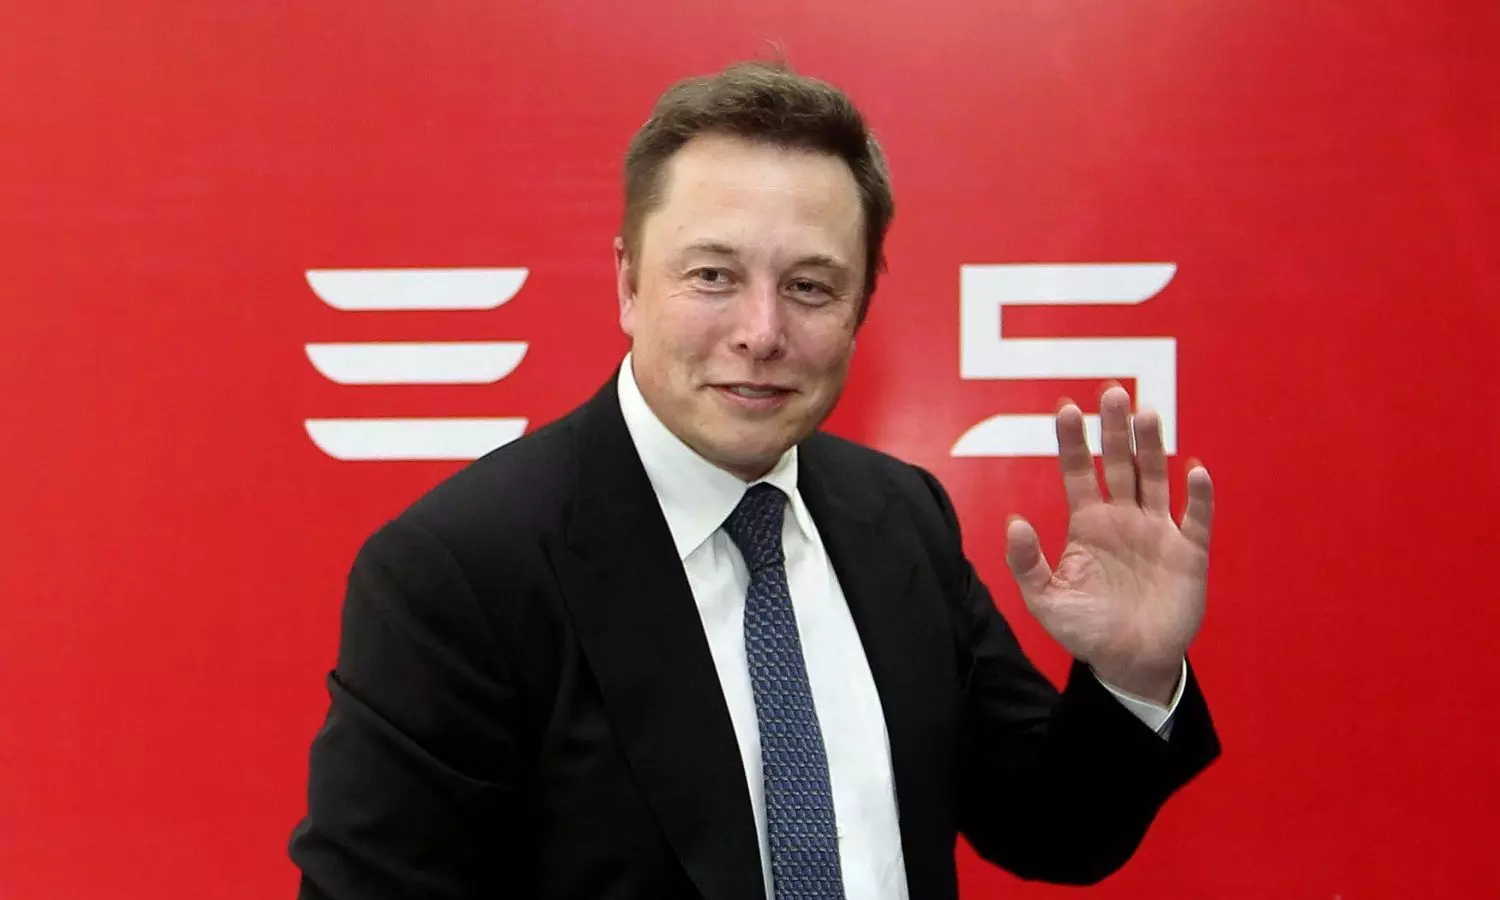 Tesla CEO Elon Musks Visit To India Postponed - Sources